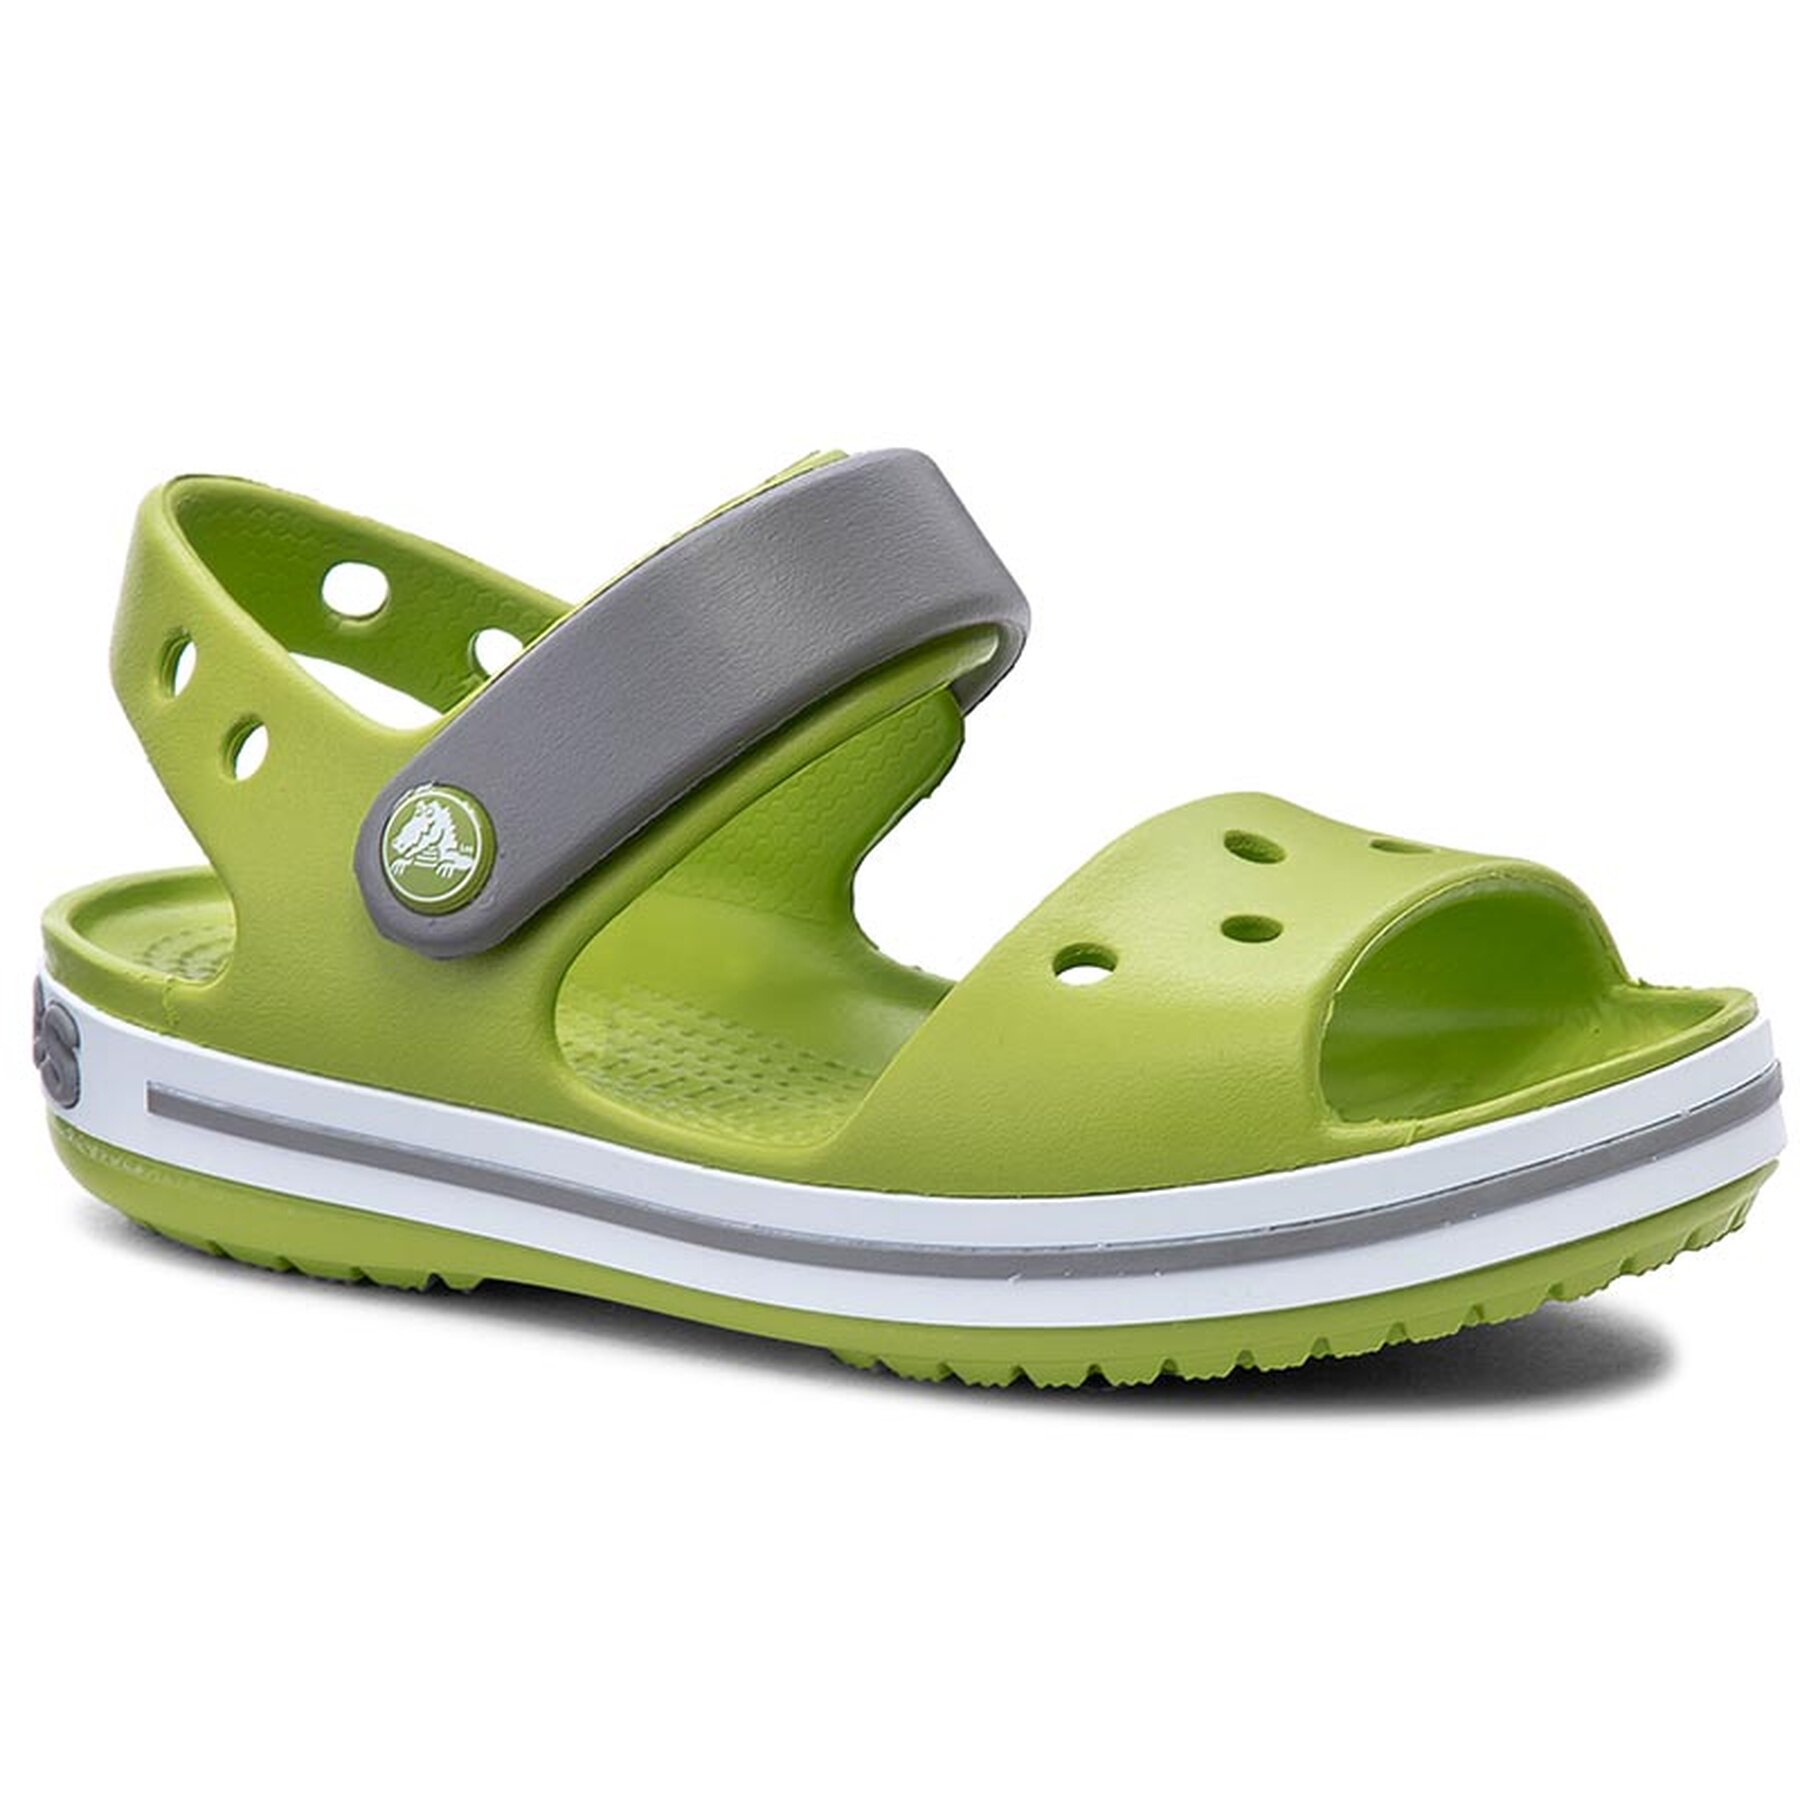 Comprar en oferta Crocs Crocband Sandal Kids (12856) volt green/smoke